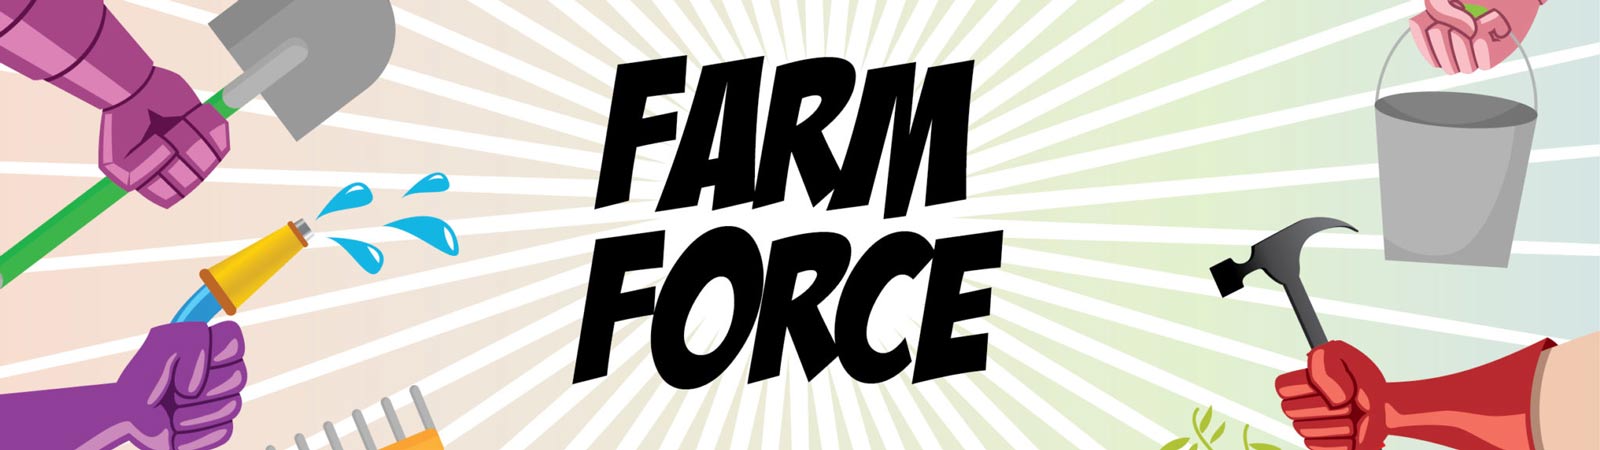 Farm force kids teaching kids